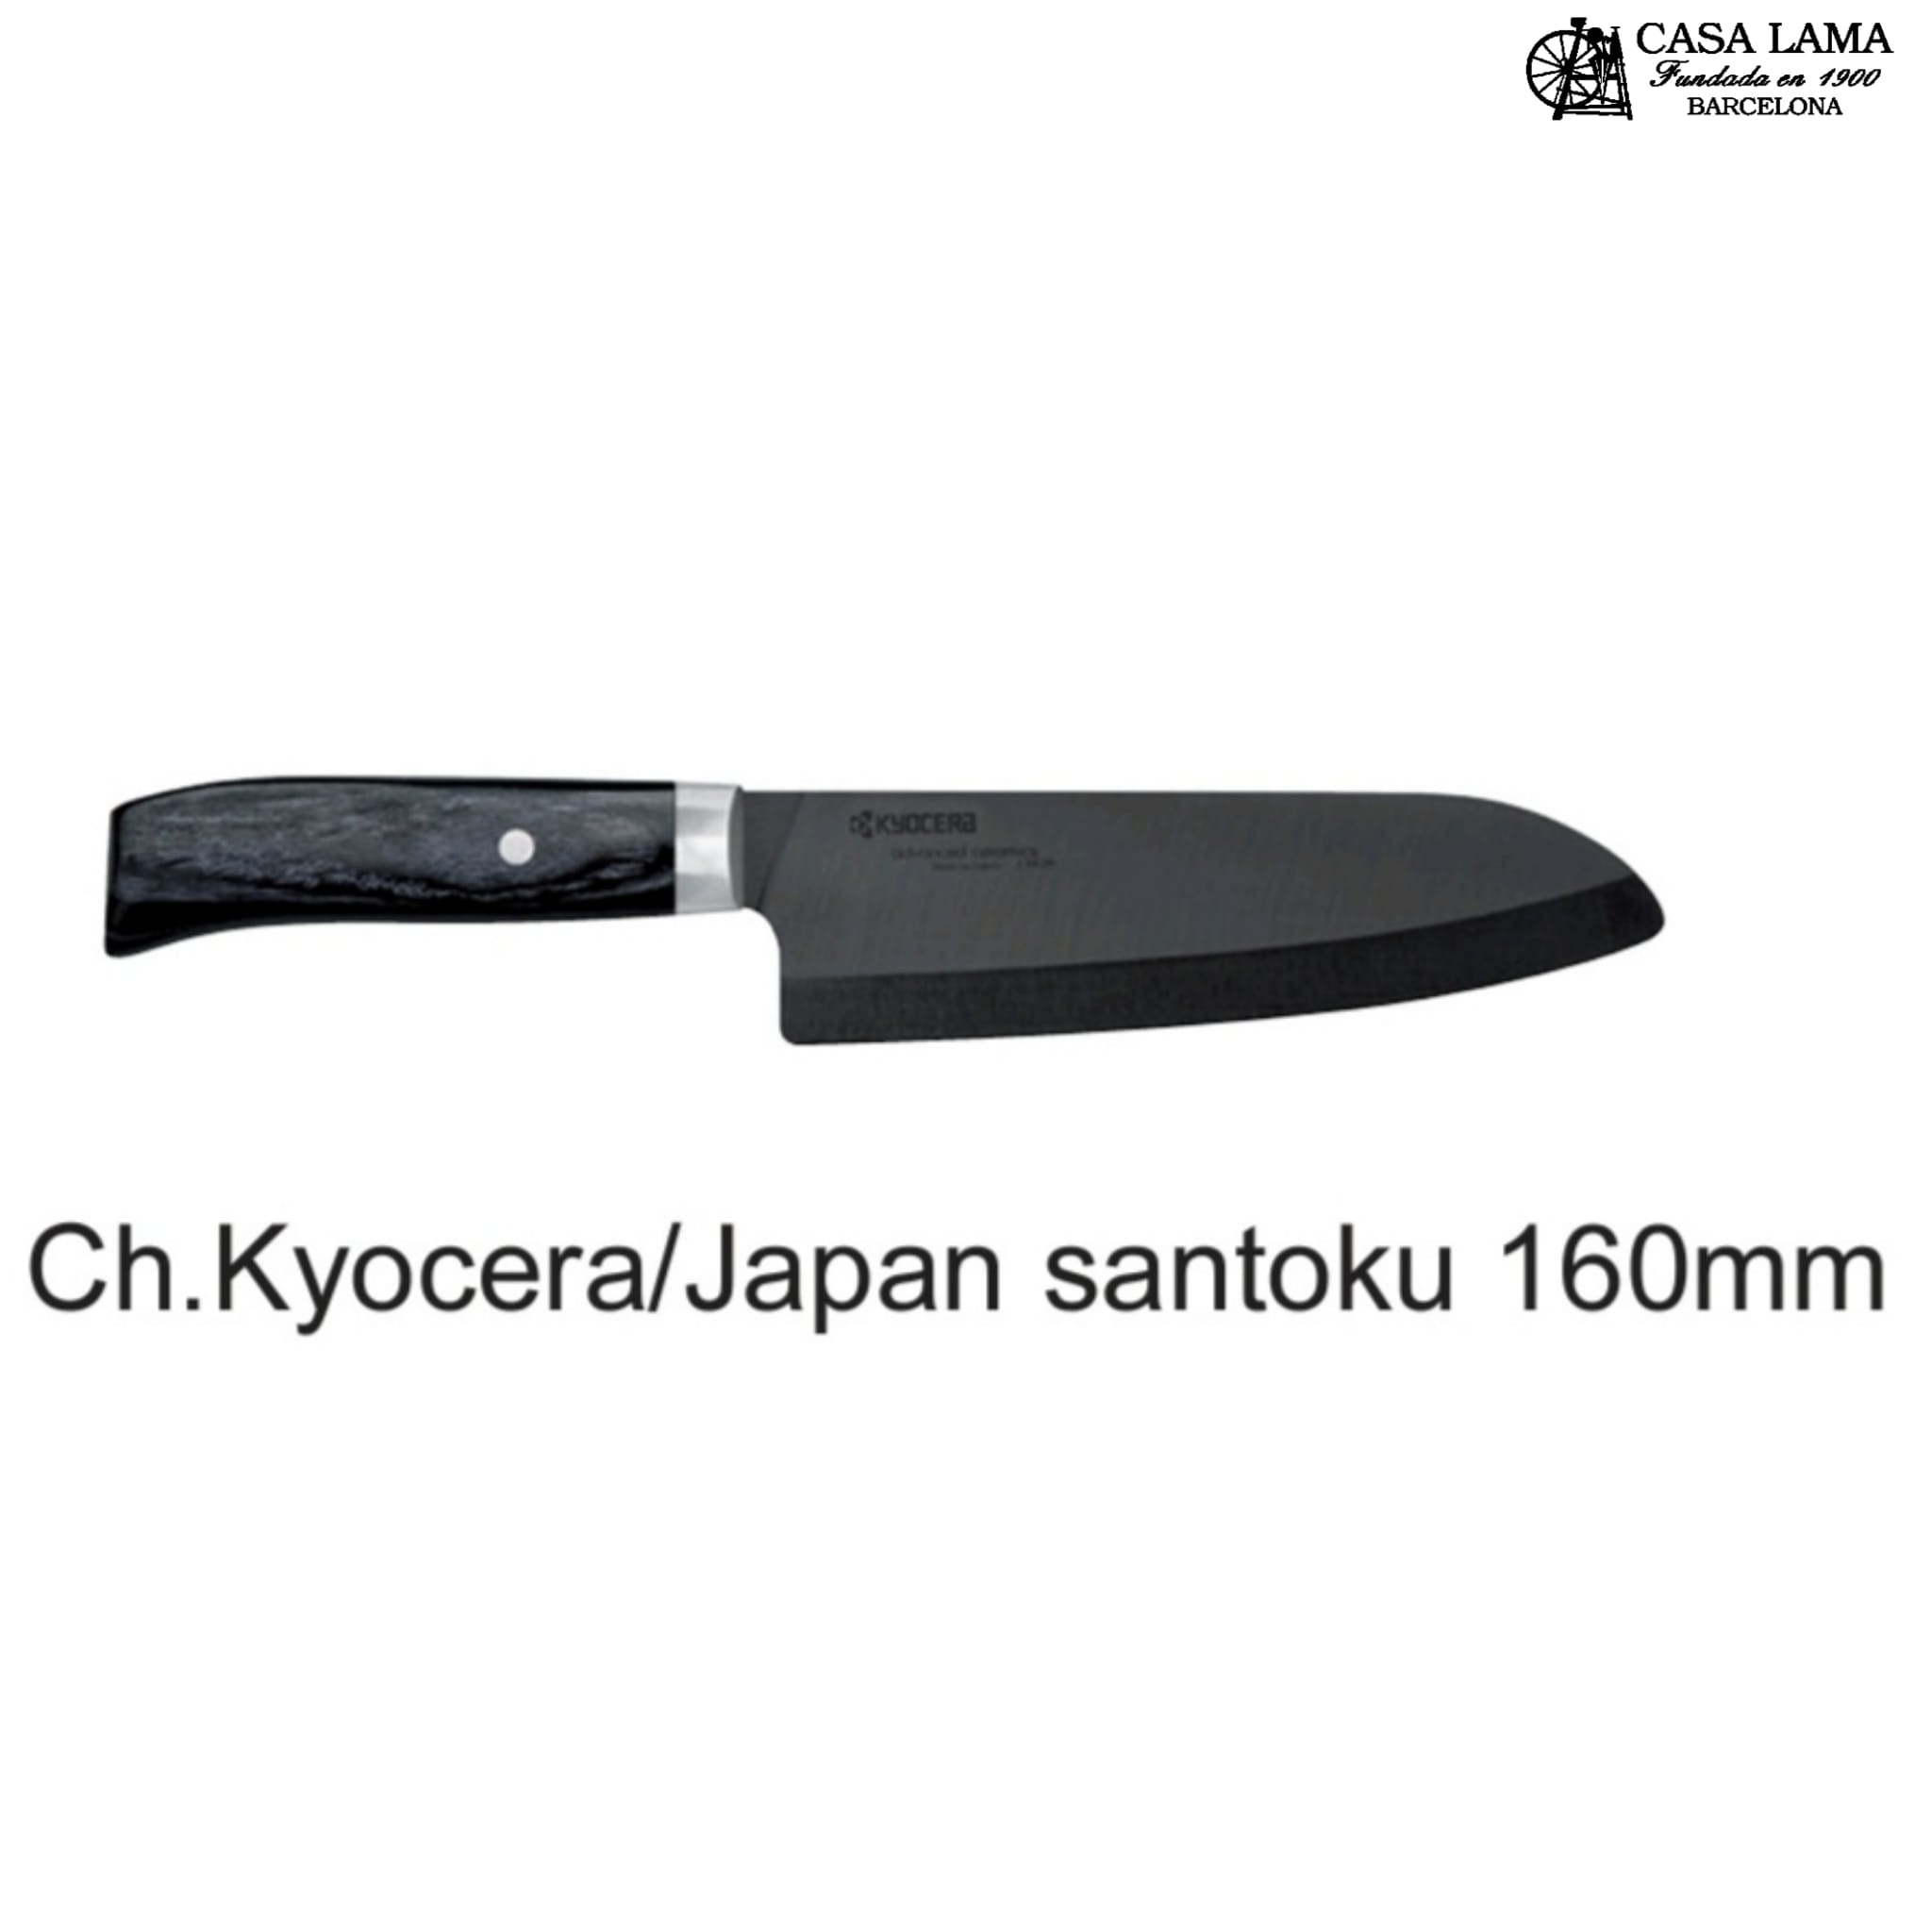 Cuchillo Kyocera Japan Serie santoku 16cm